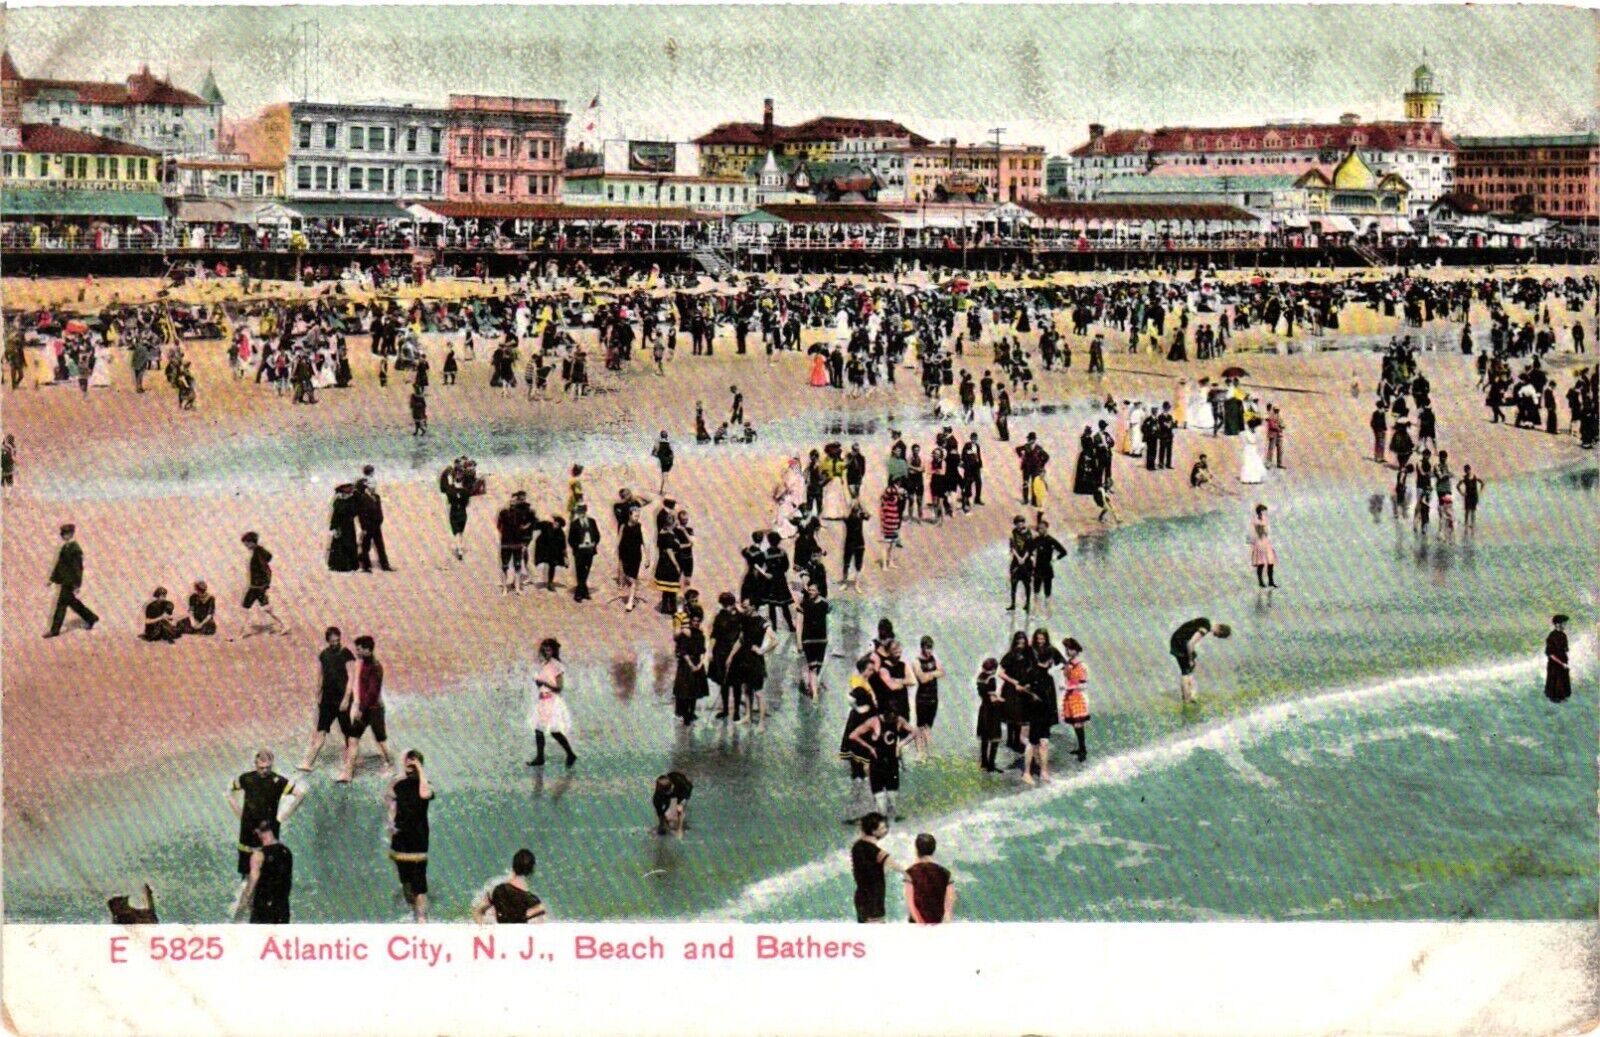 Atlantic City, New Jersy, Beach and Bathers